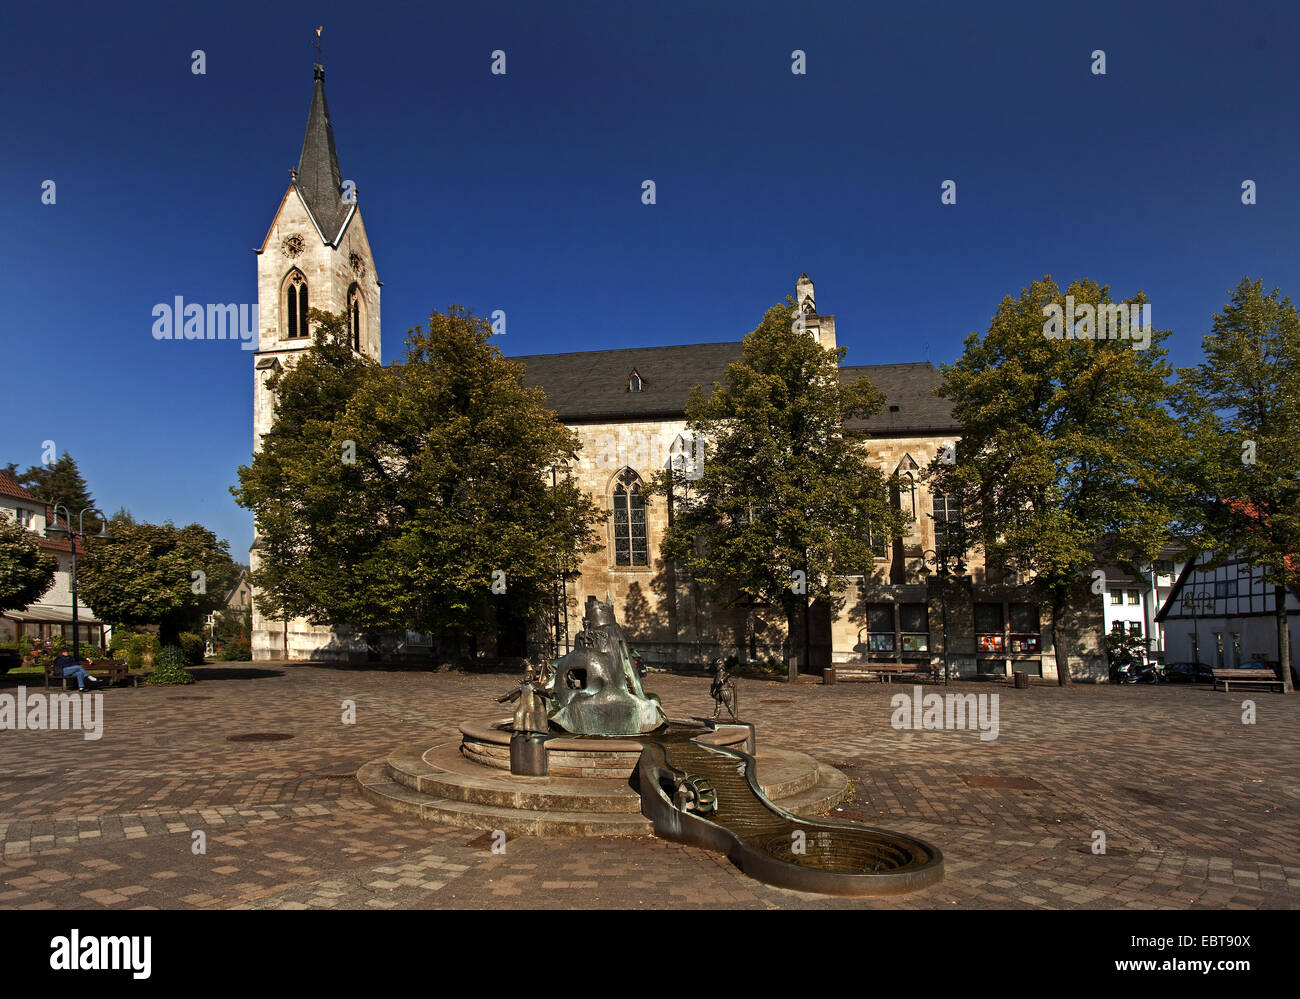 St Magnus church and well on the church square in Niedermarsberg, Germany, North Rhine-Westphalia, Sauerland, Marsberg Stock Photo